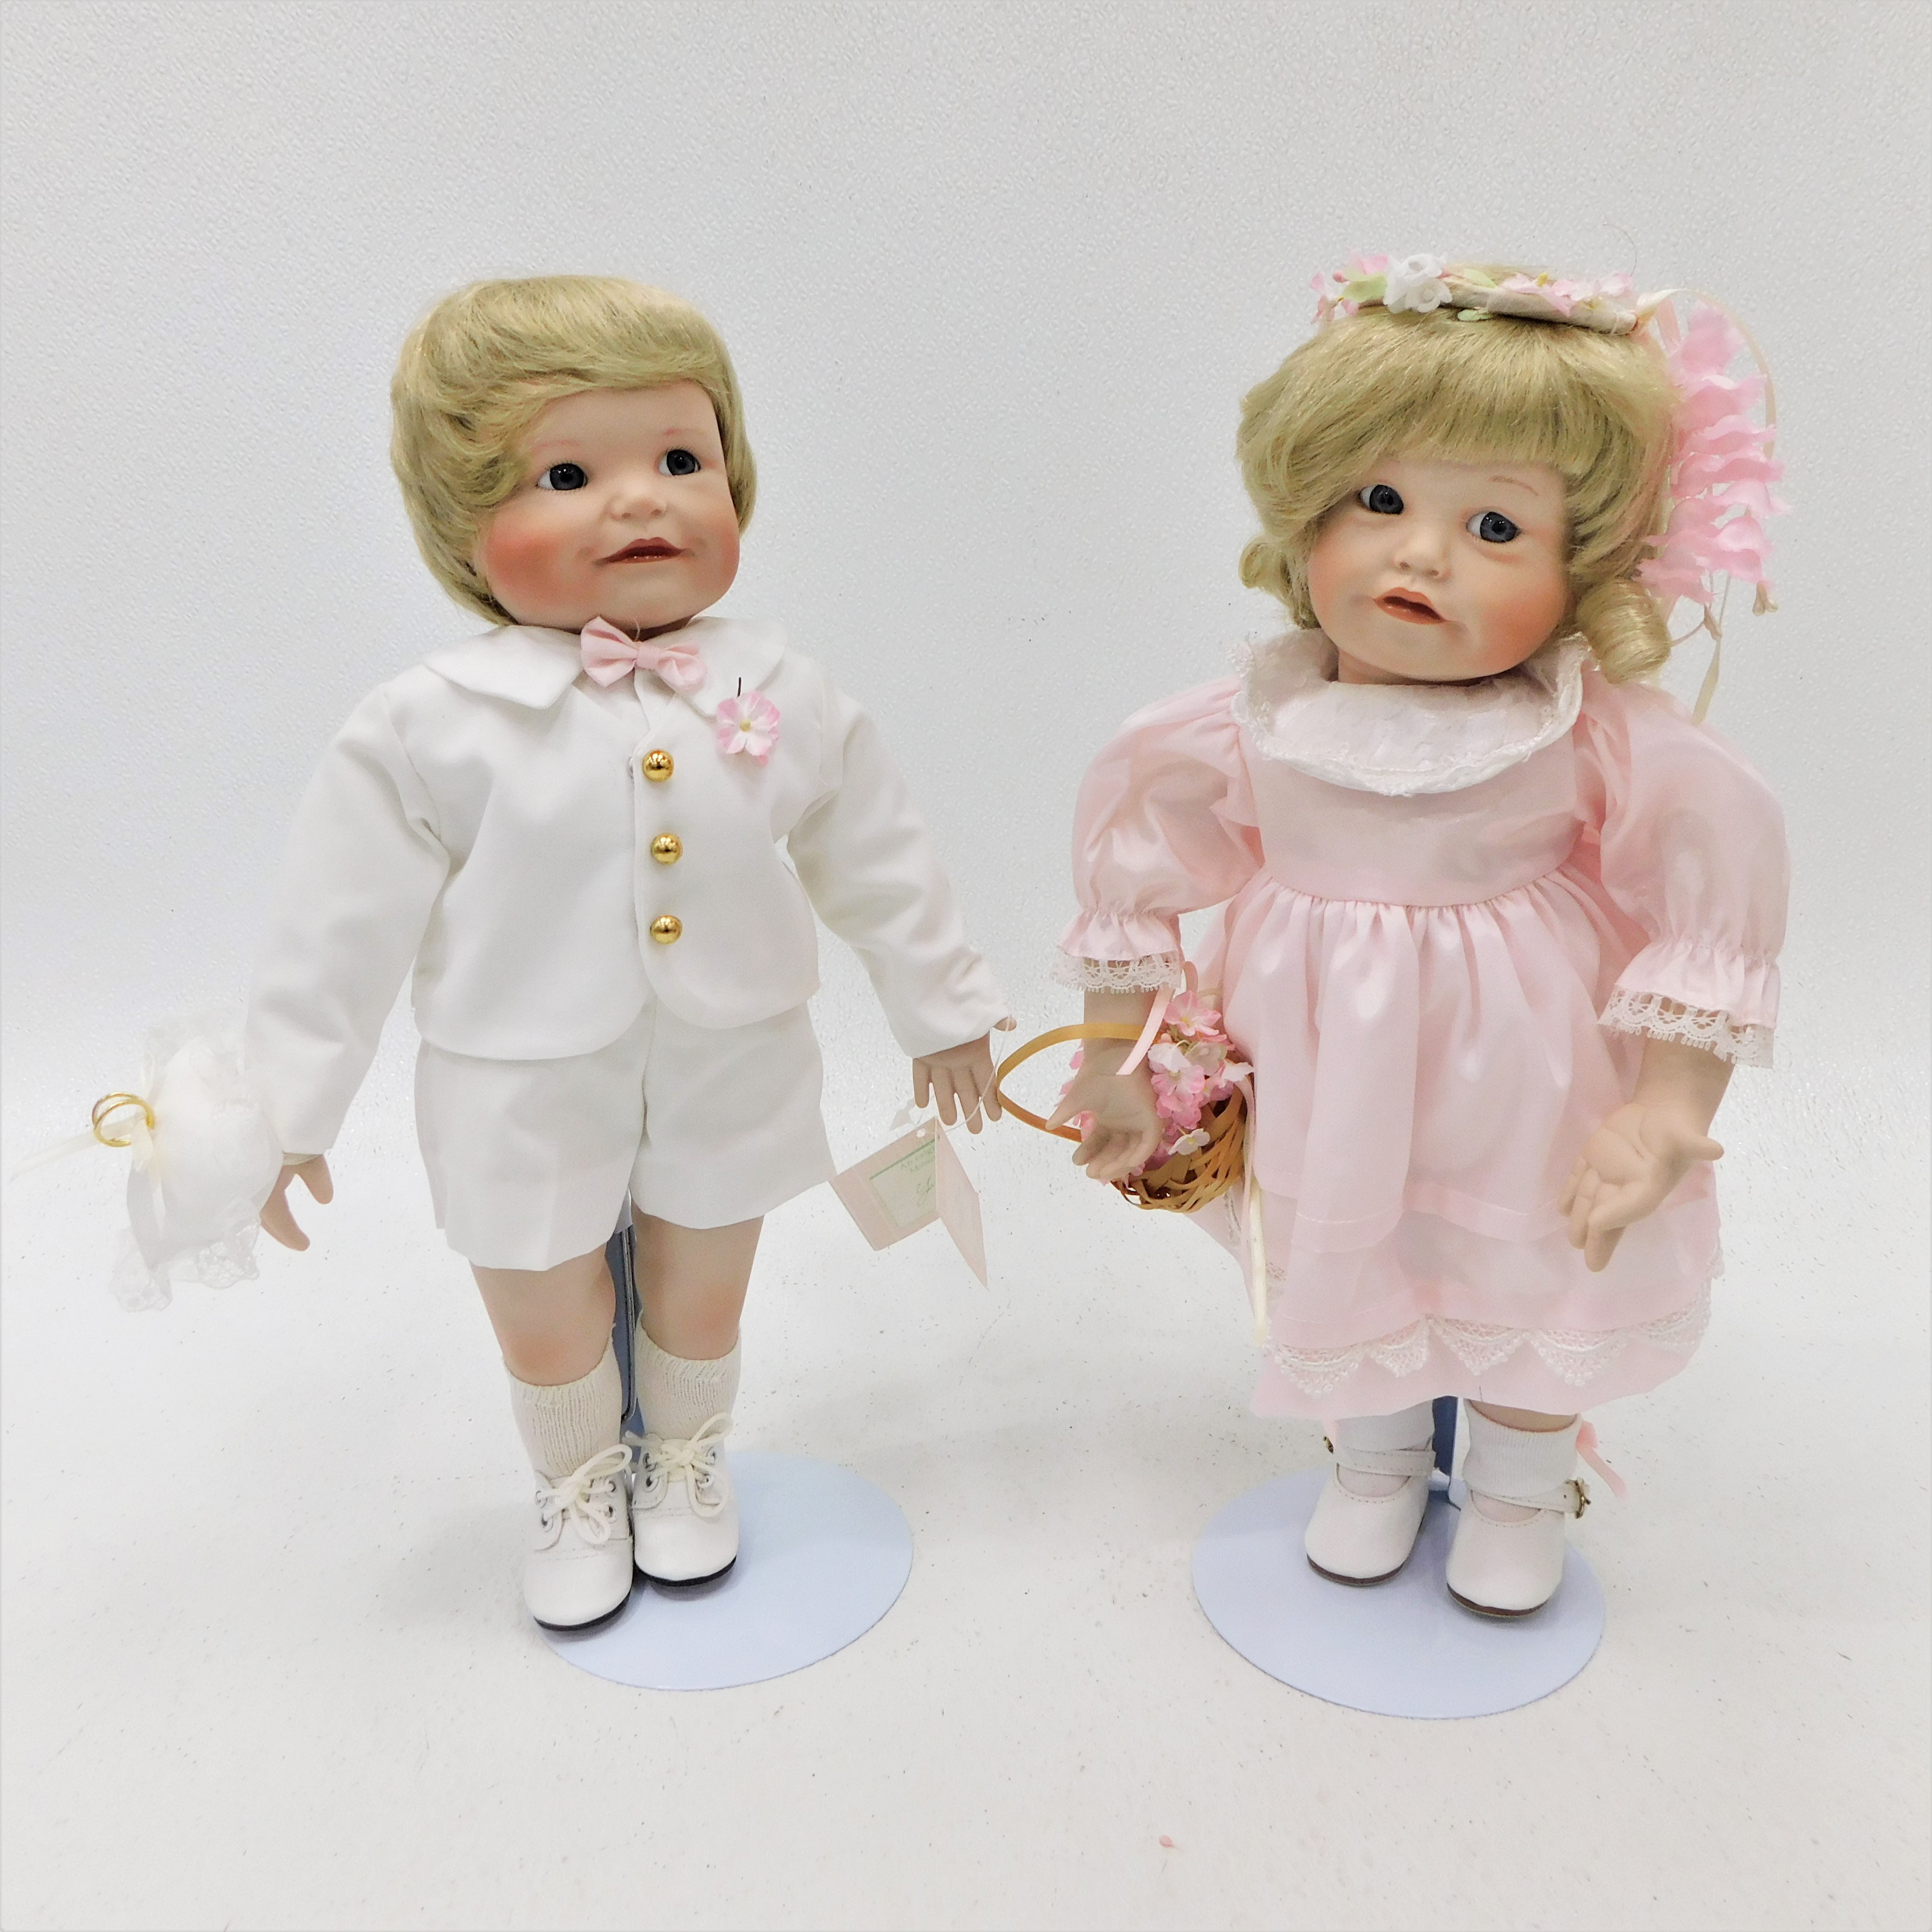 Fashion Dolls at Van's Doll Treasures: PLL and Their Dolls